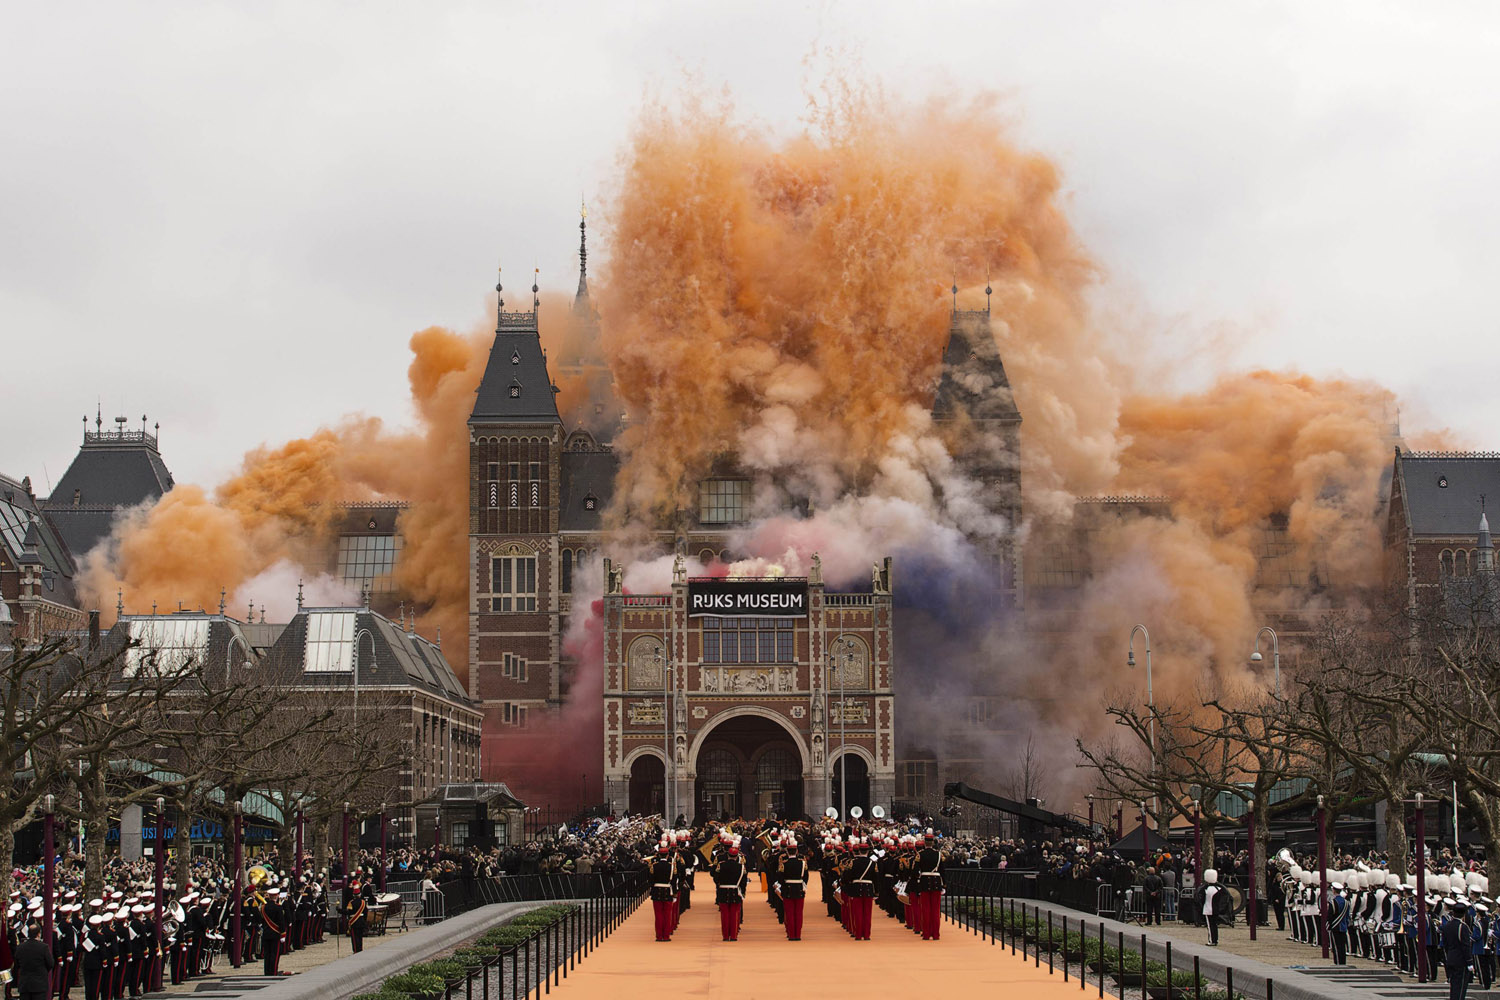 Queen Beatrix of Netherlands ignites fireworks at the Rijksmuseum in Amsterdam